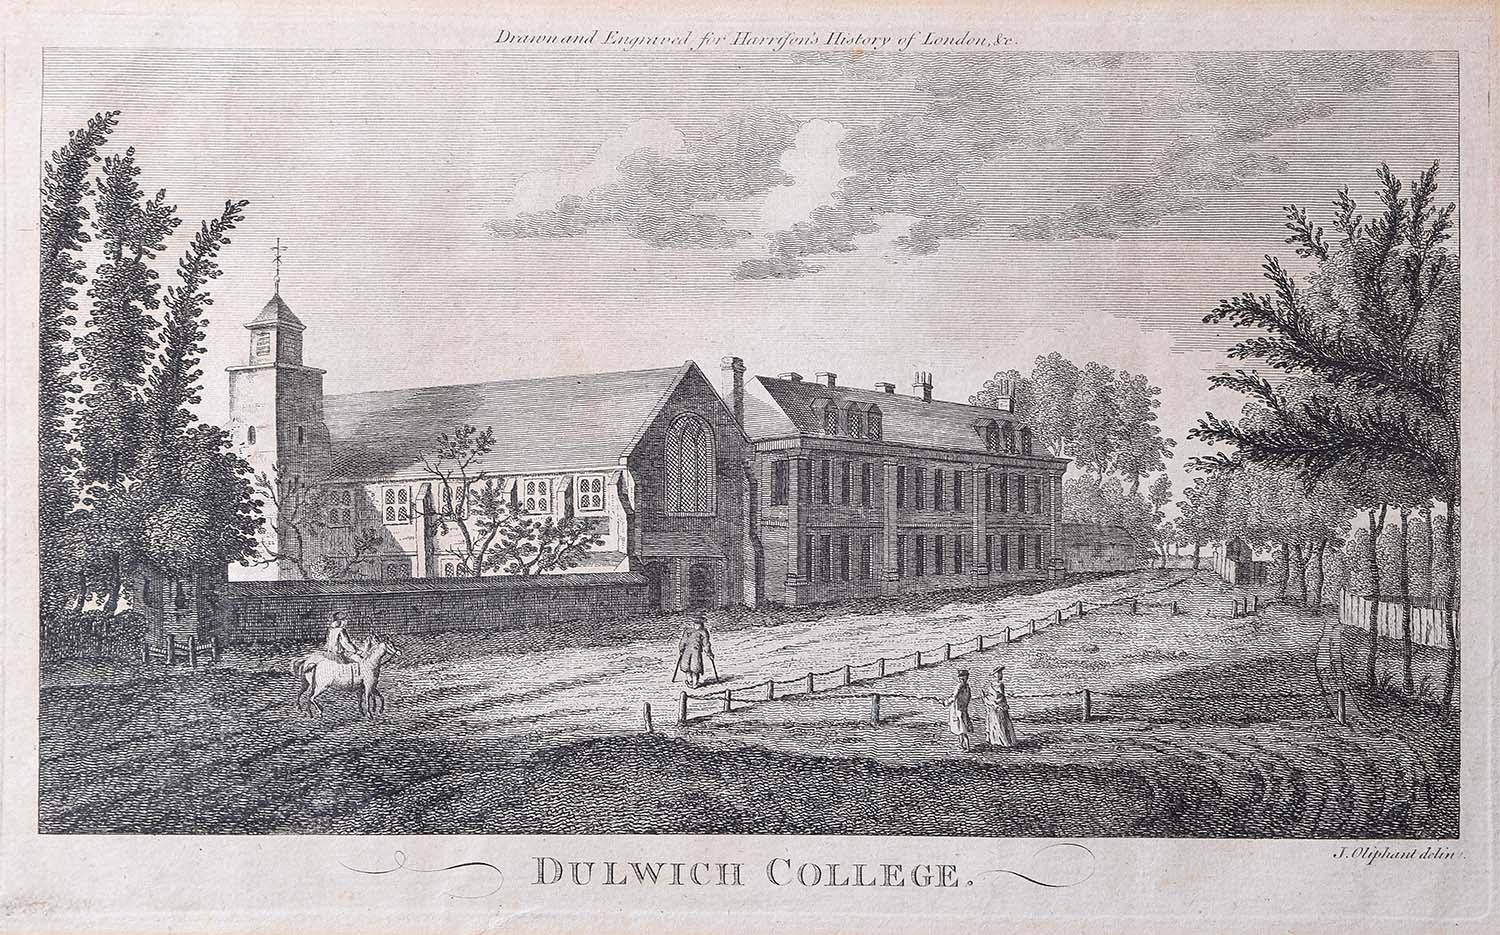 Dulwich College J Oliphant-Gravur 1775 Harrisons Geschichte Londons, Dulwich College